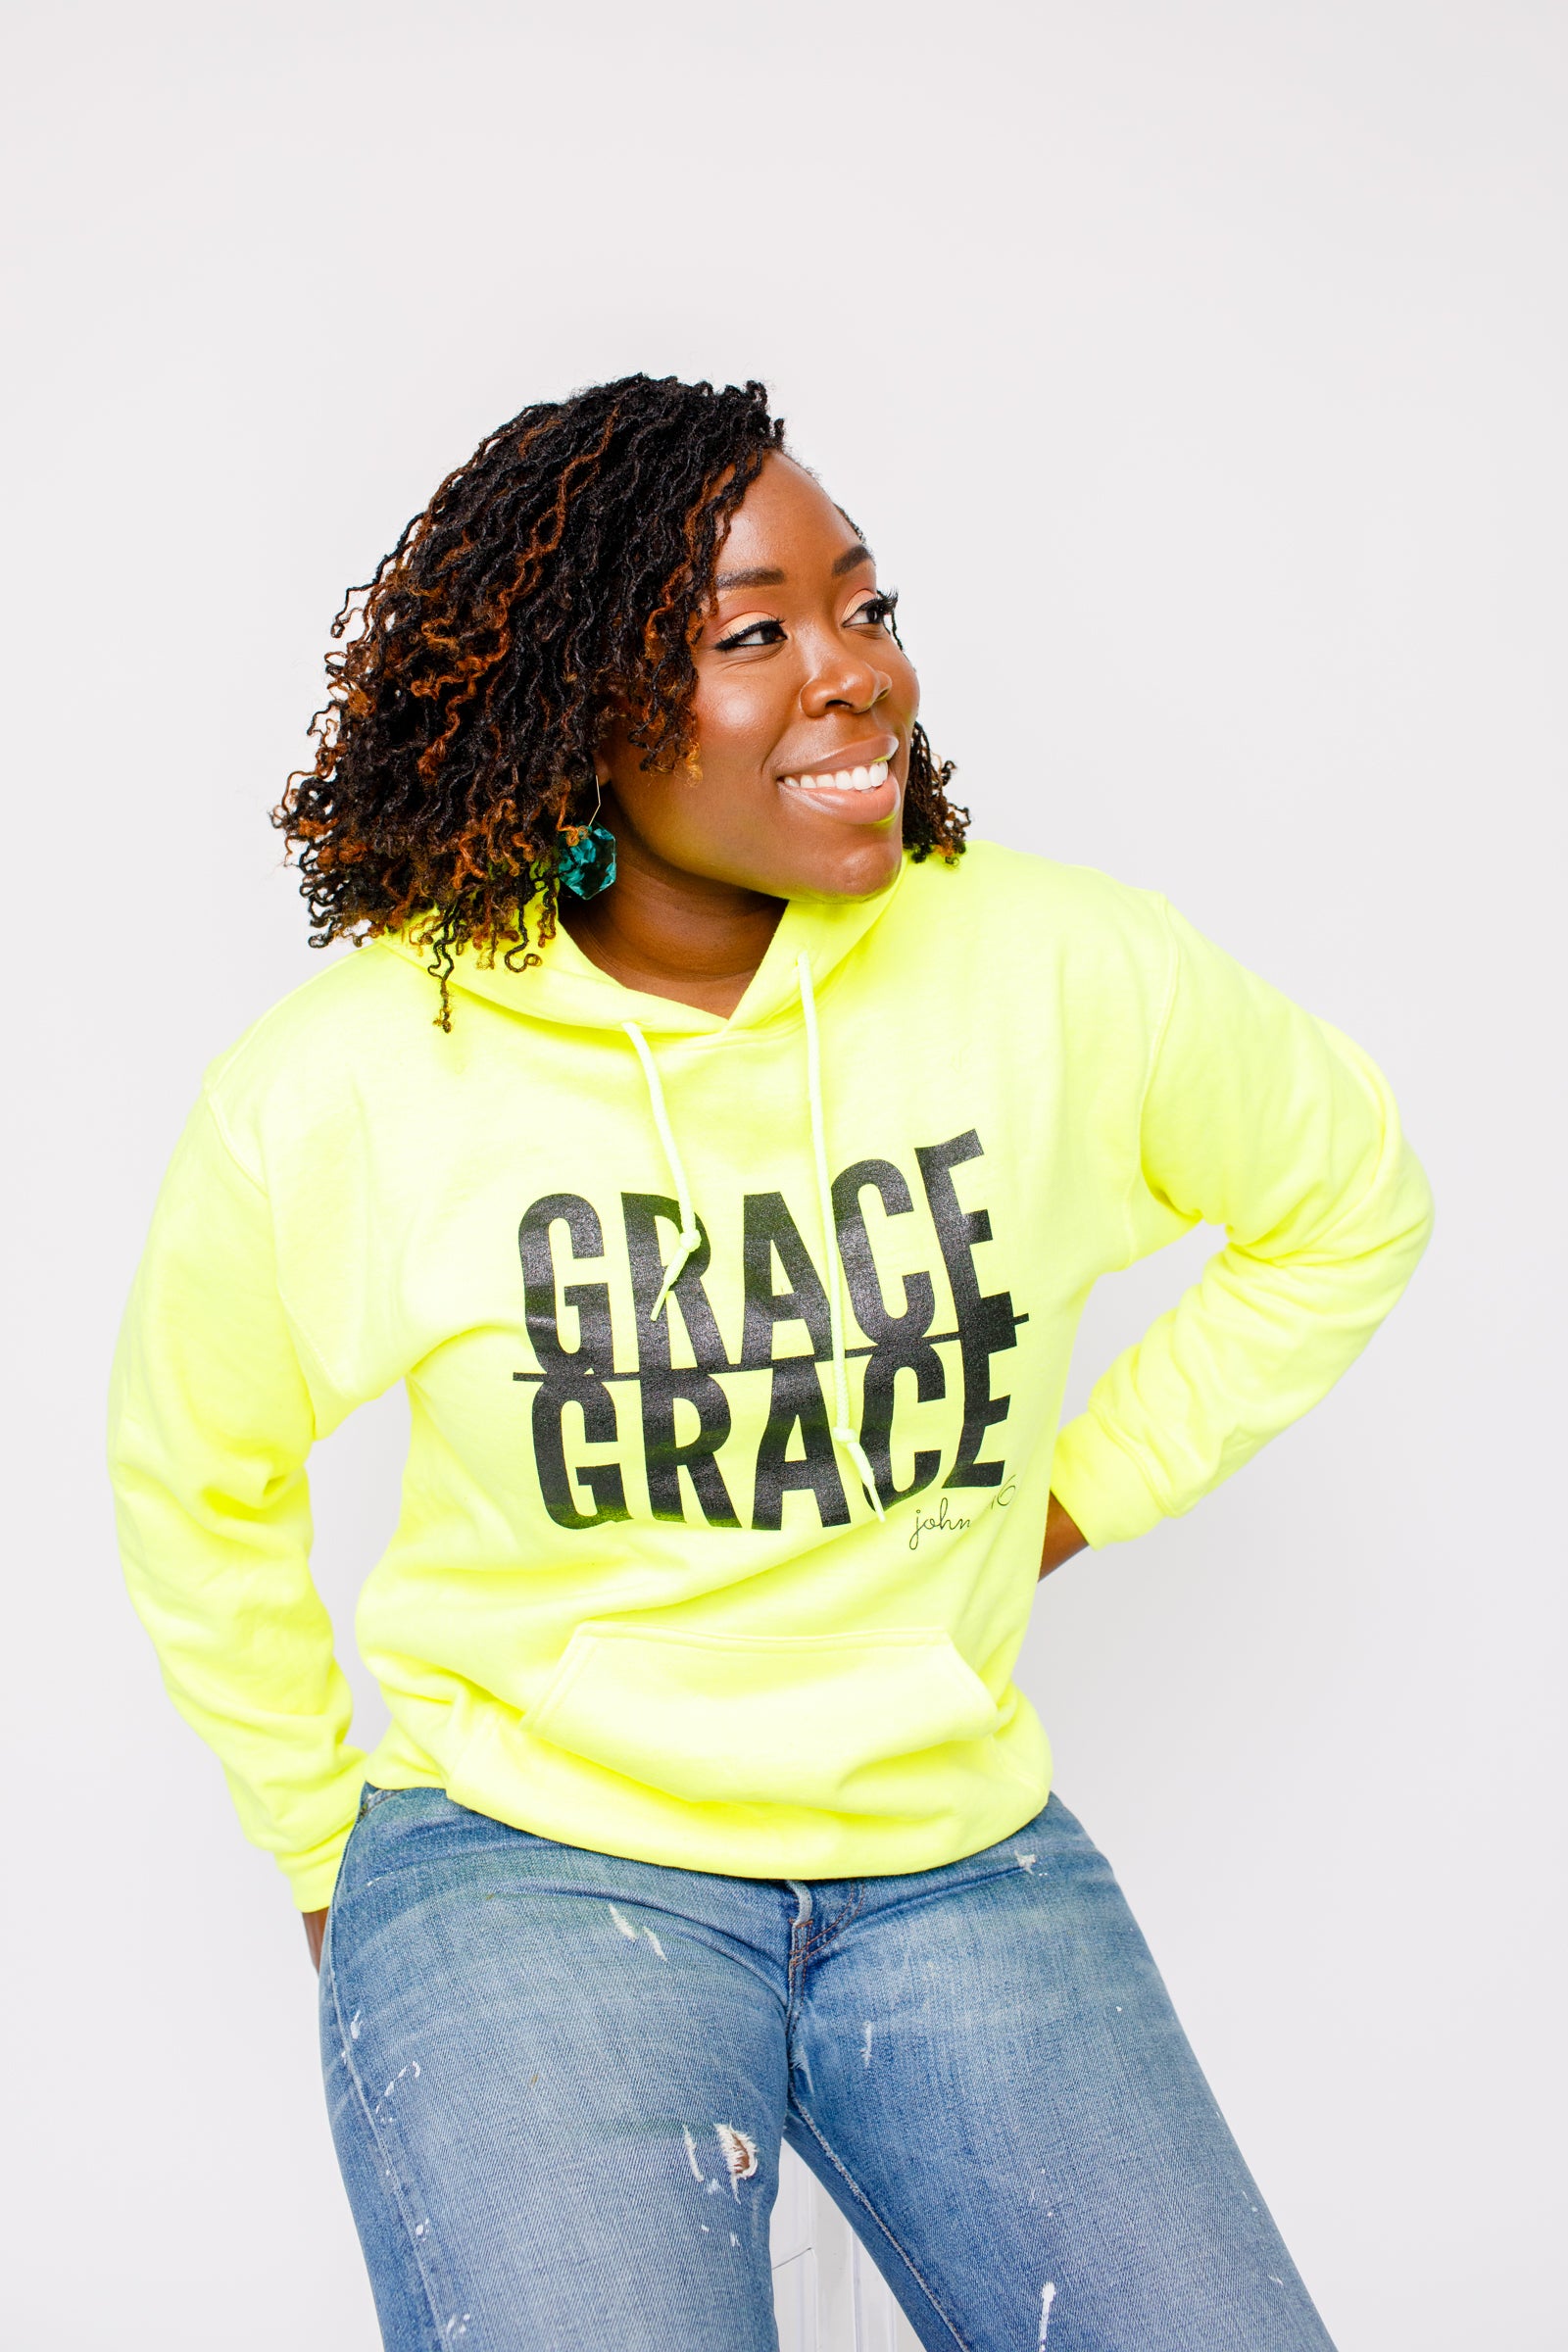 Grace Upon Grace Hoodie